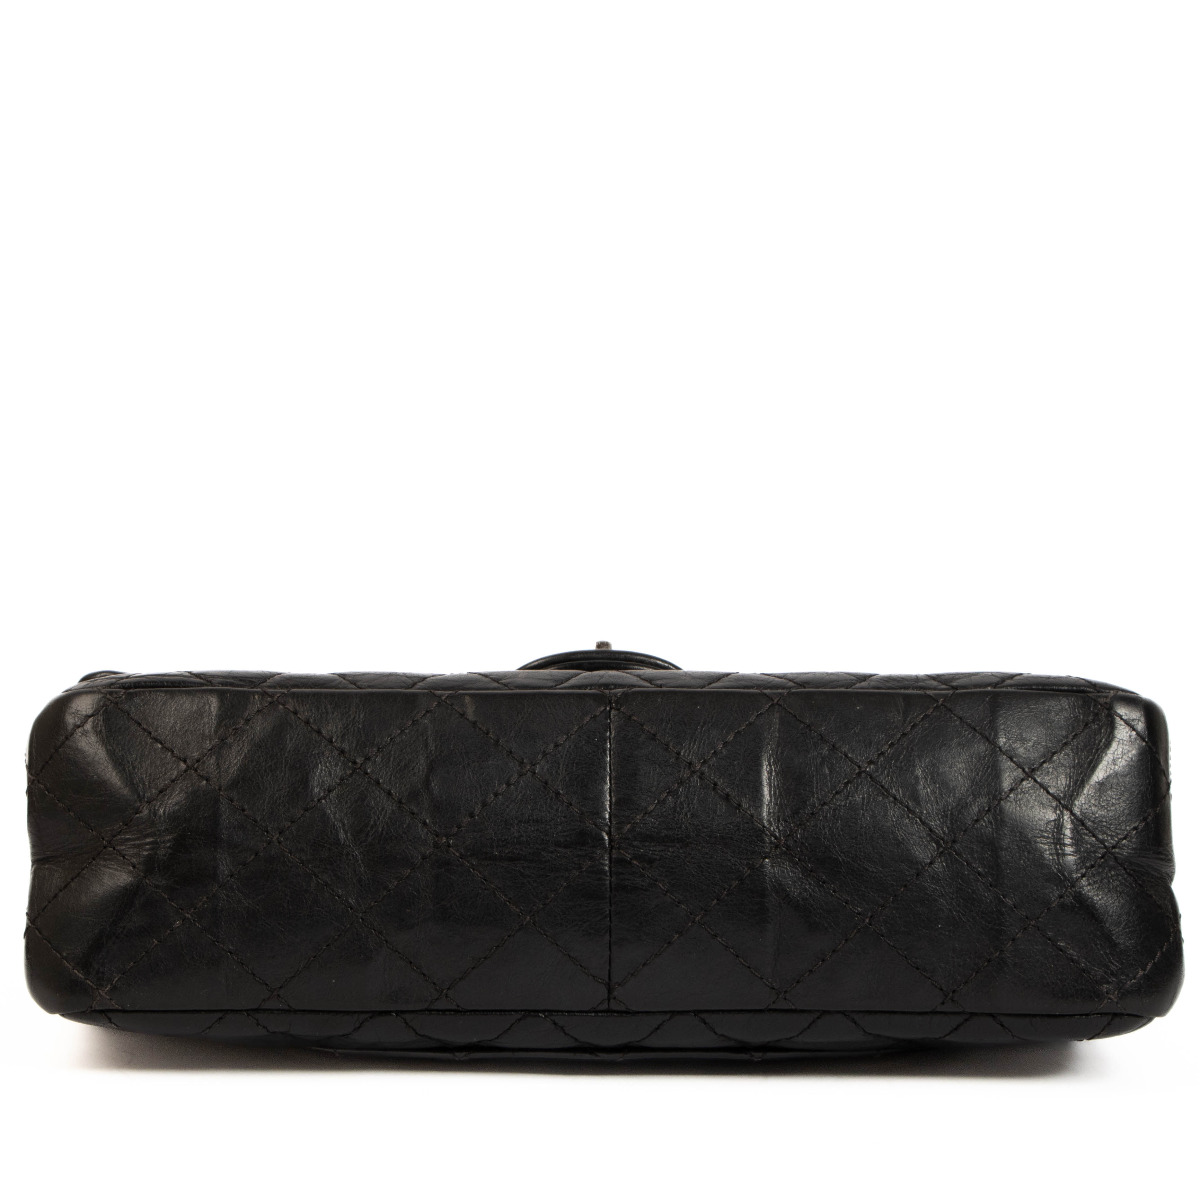 classic black chanel handbag